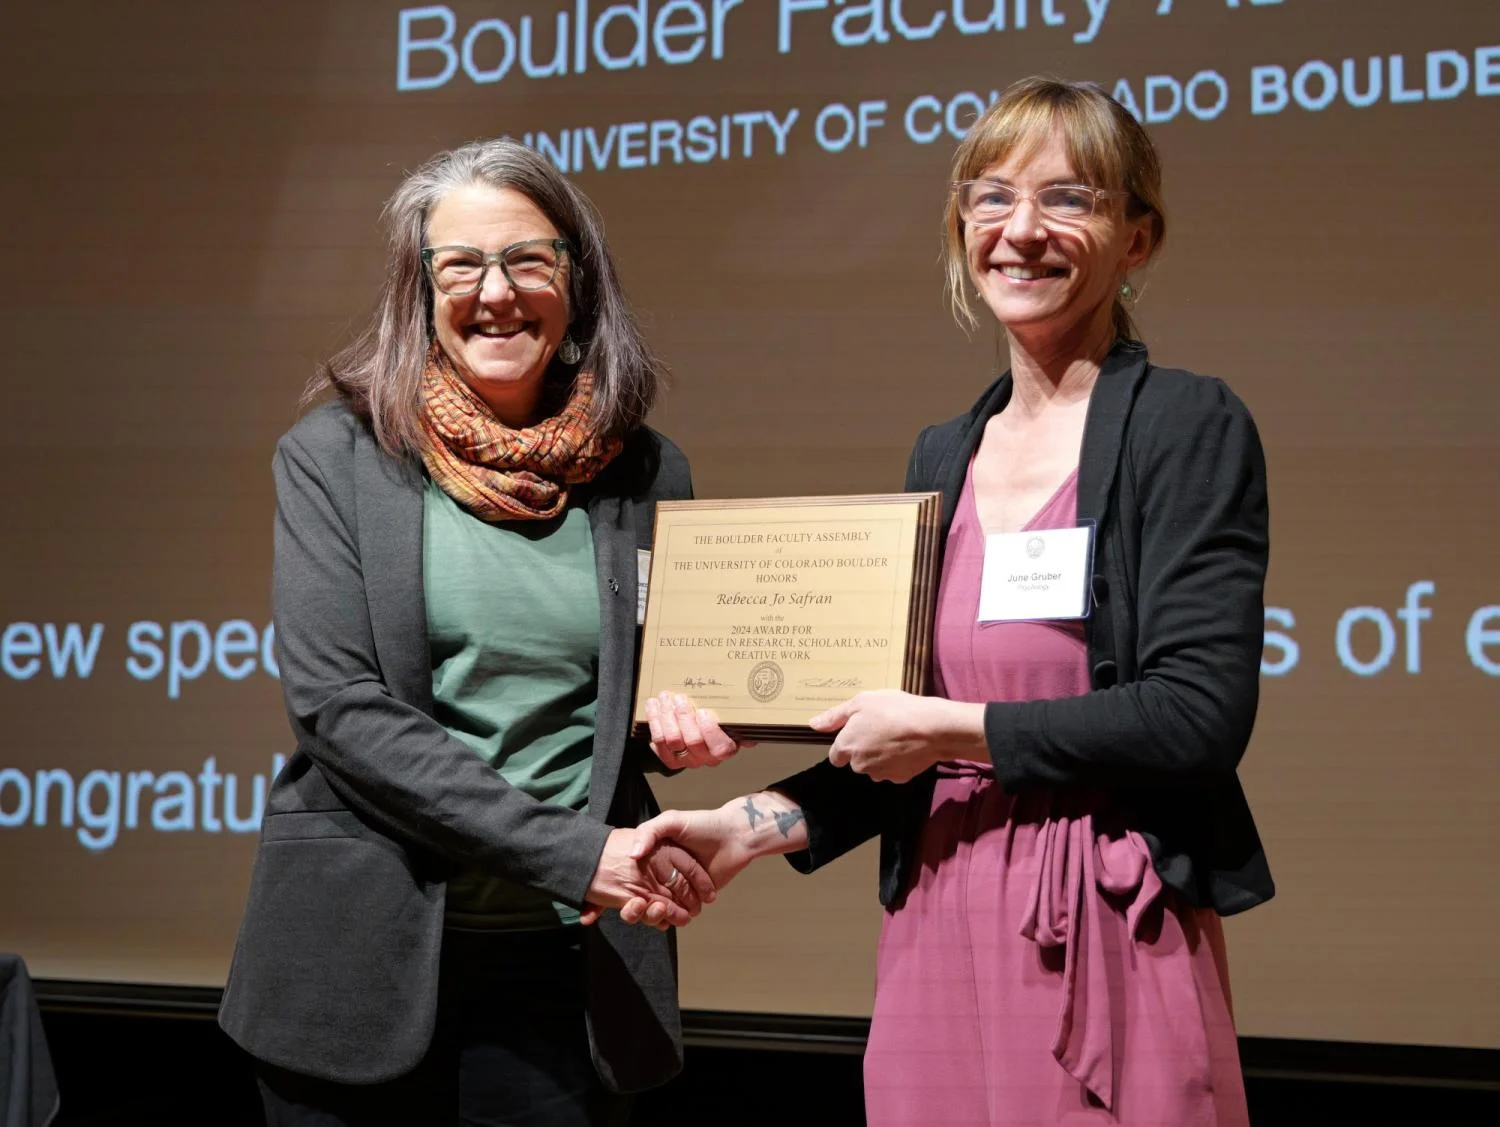 BFA winner Rebecca Safran and June Gruber